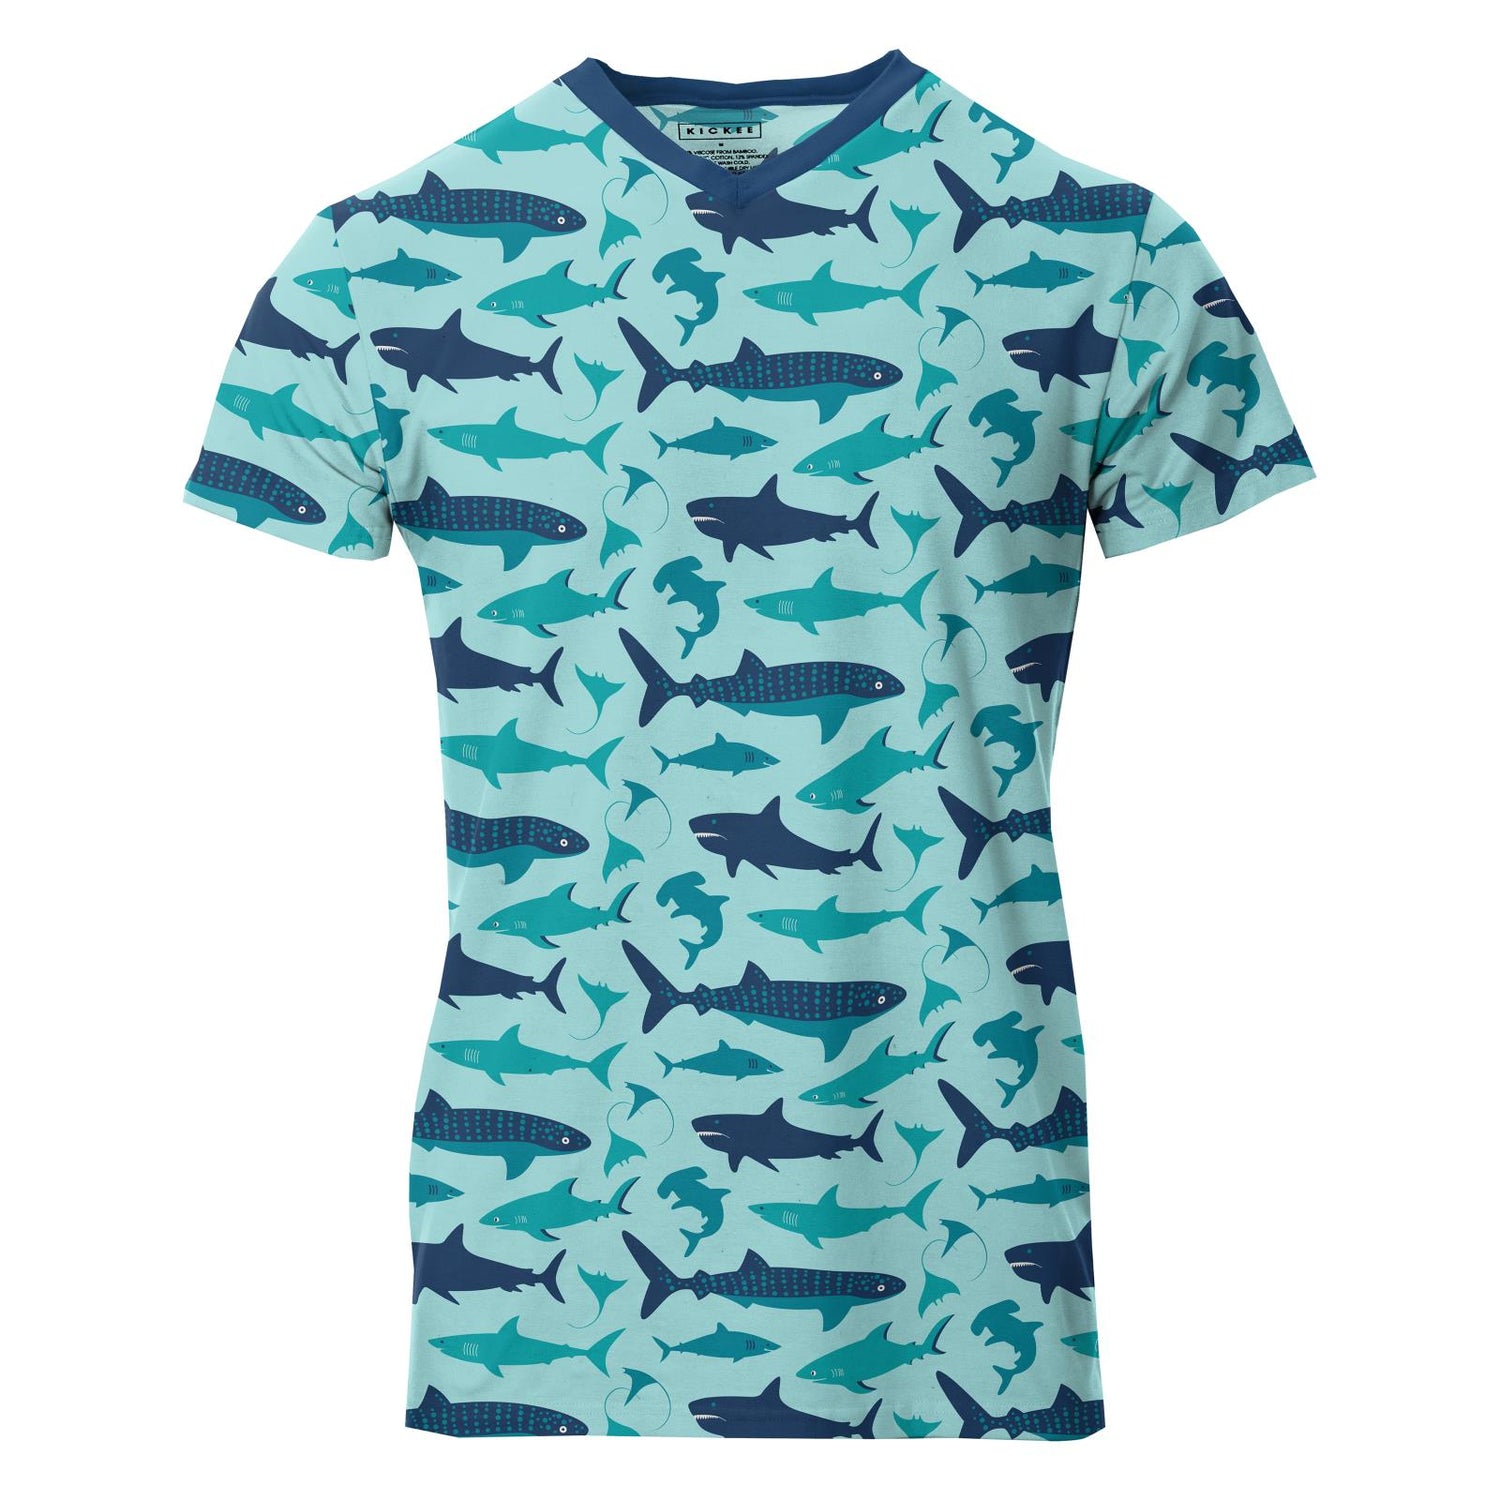 Men's Print Short Sleeve V-Neck Tee in Summer Sky Shark Week